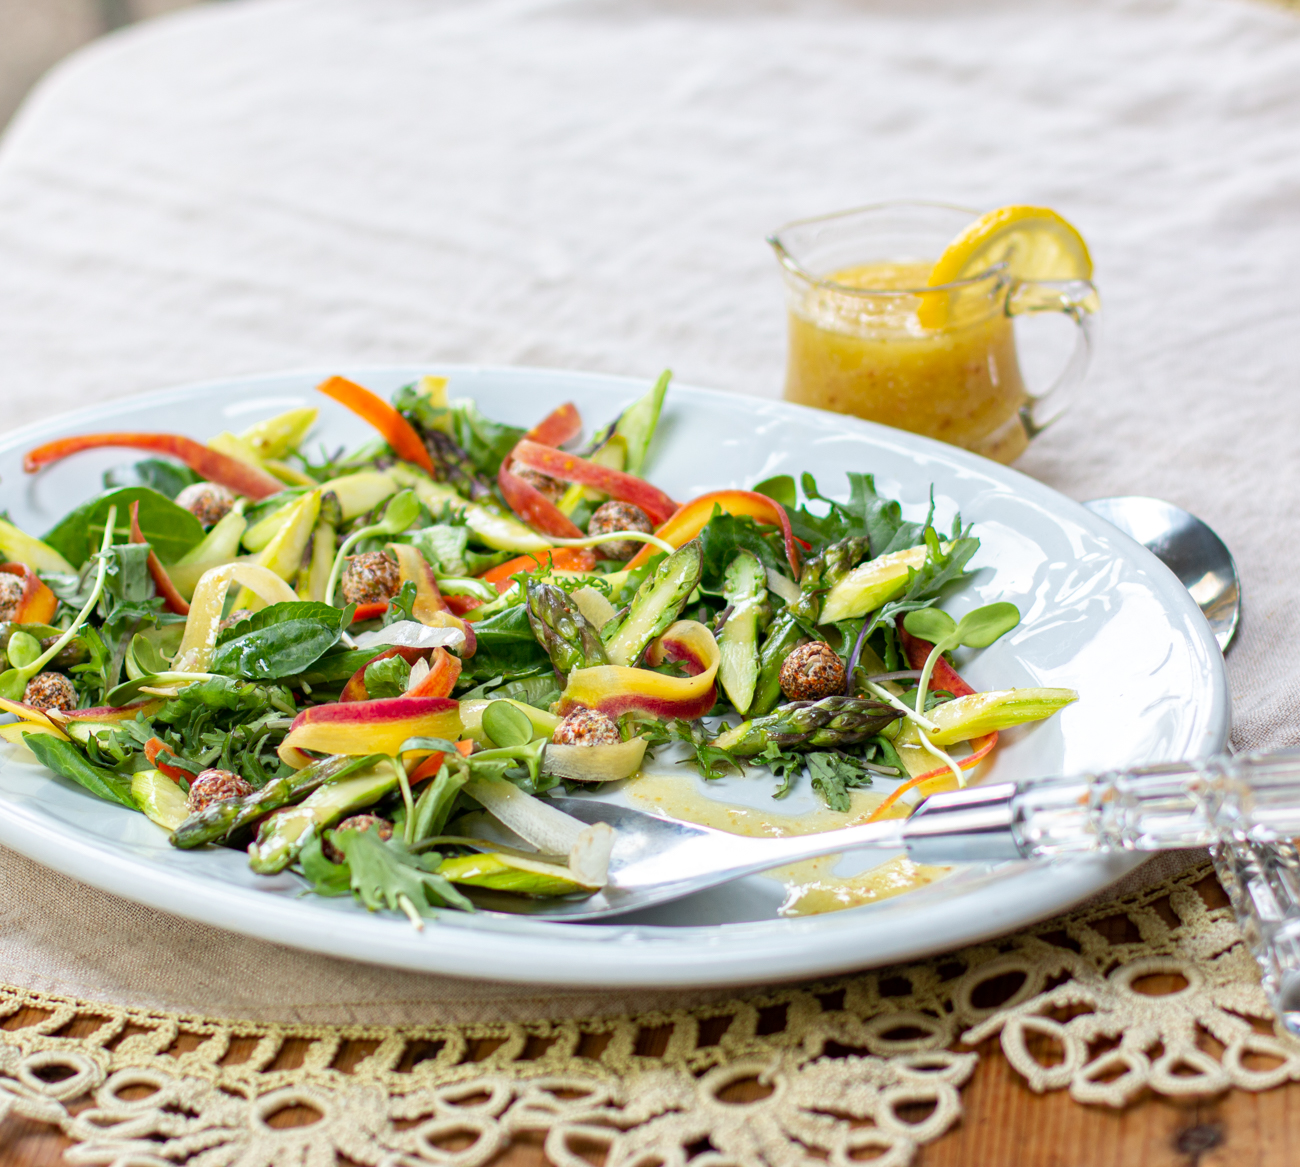 Roasted Asparagus & Shaved Heirloom Carrot Salad with a Zesty Lemon Vinaigrette